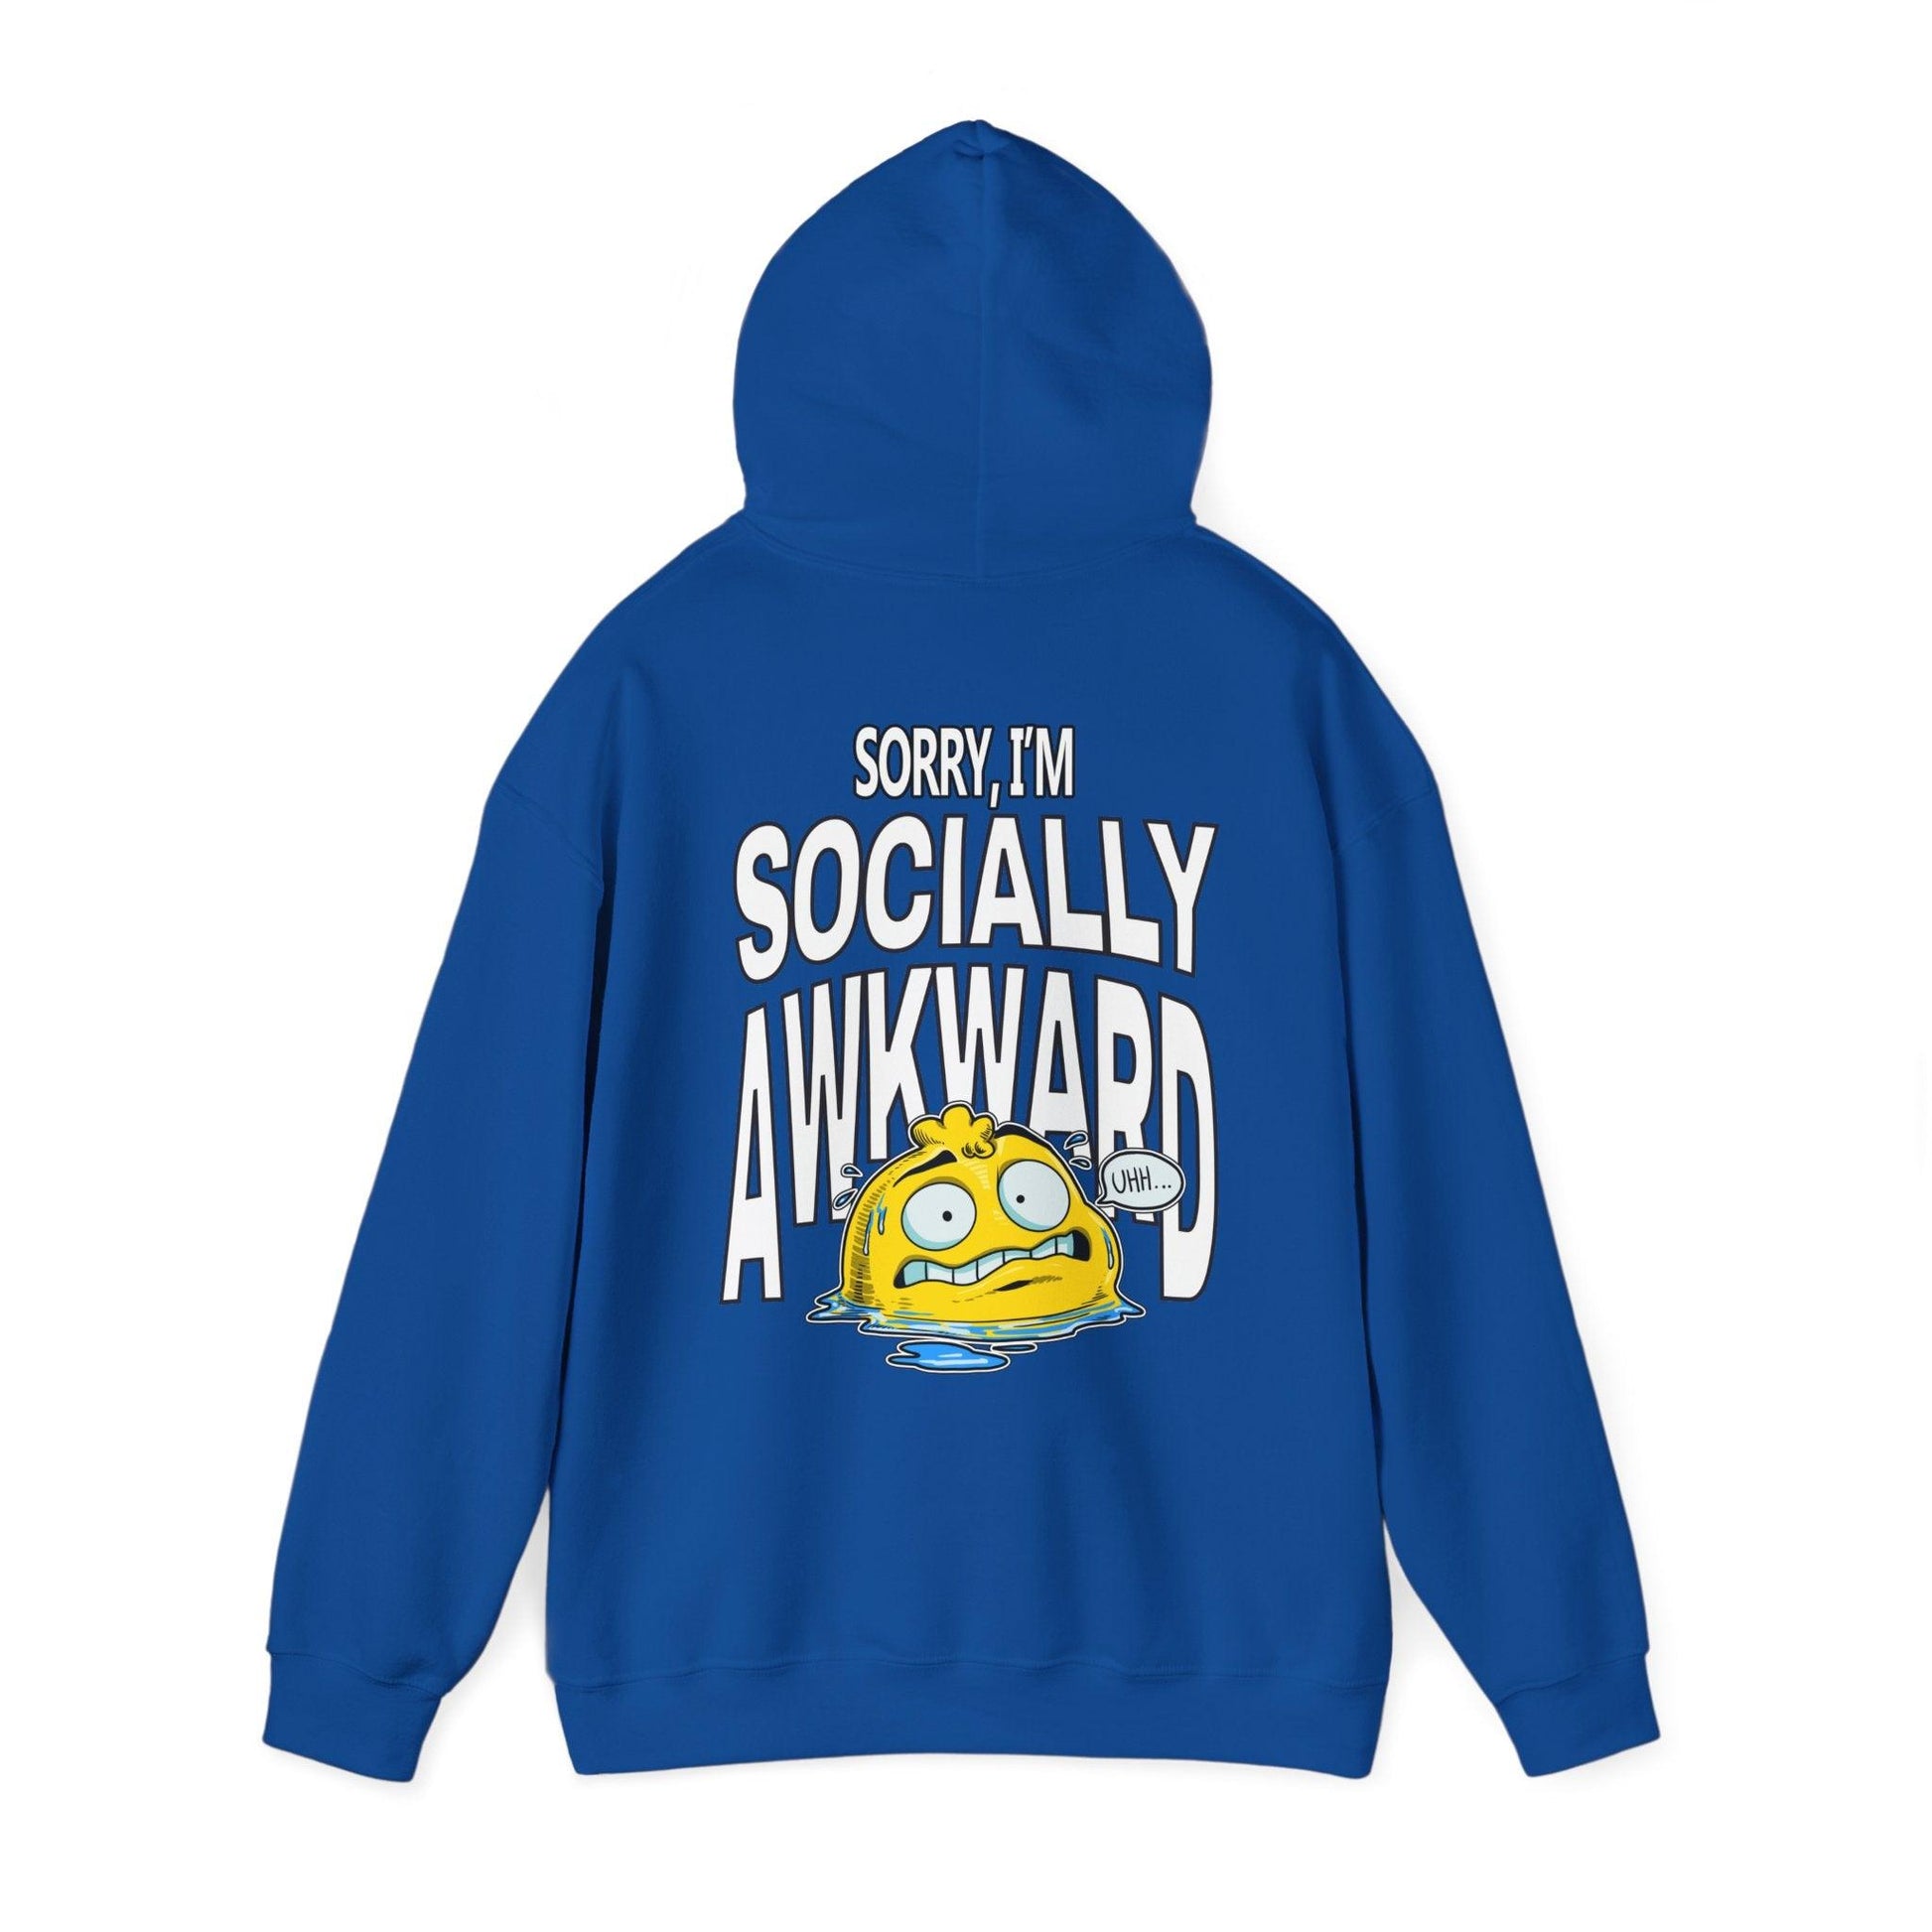 Socially Awkward - Unisex Heavy Blend Hooded Sweatshirt - Shaneinvasion